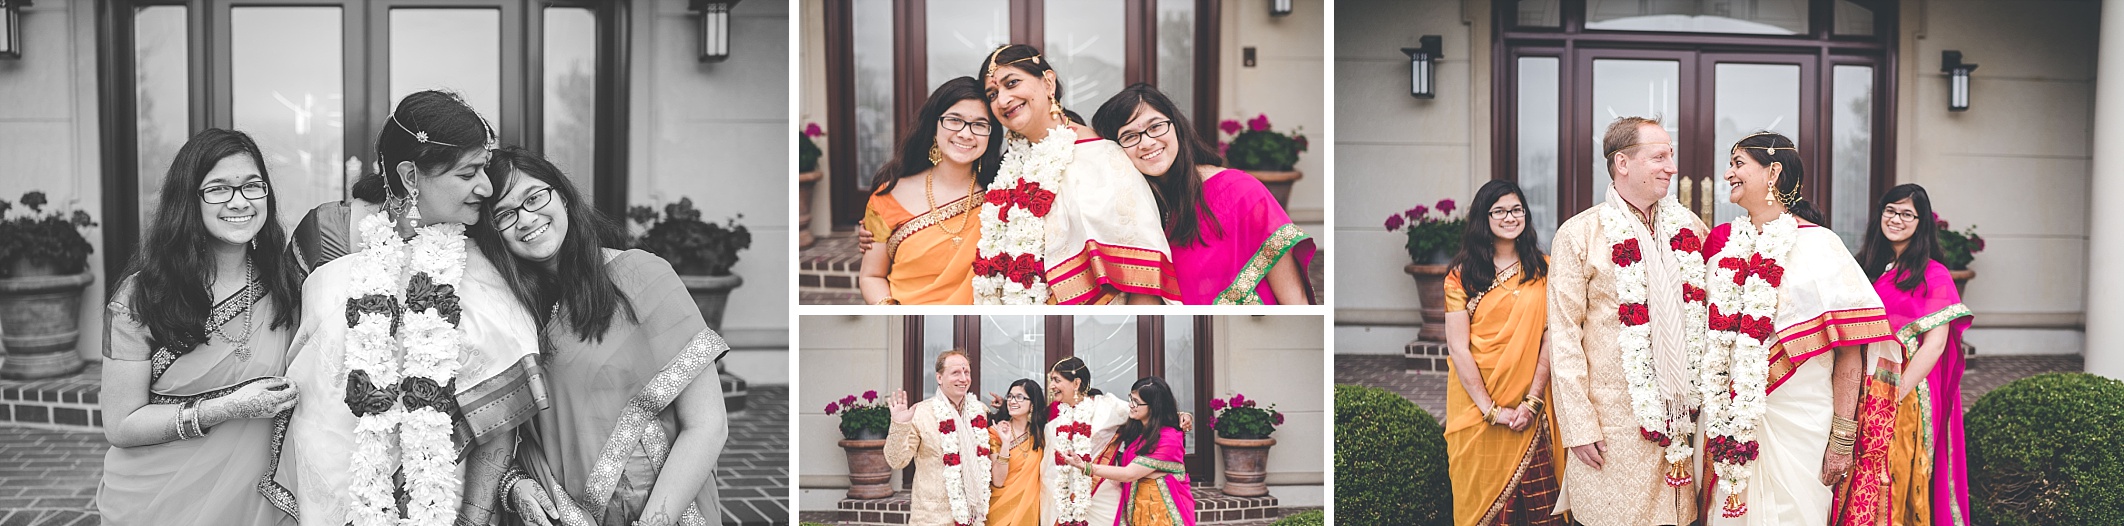 2690_dayton-indian-wedding-photographer-beavercreek_0046.jpg